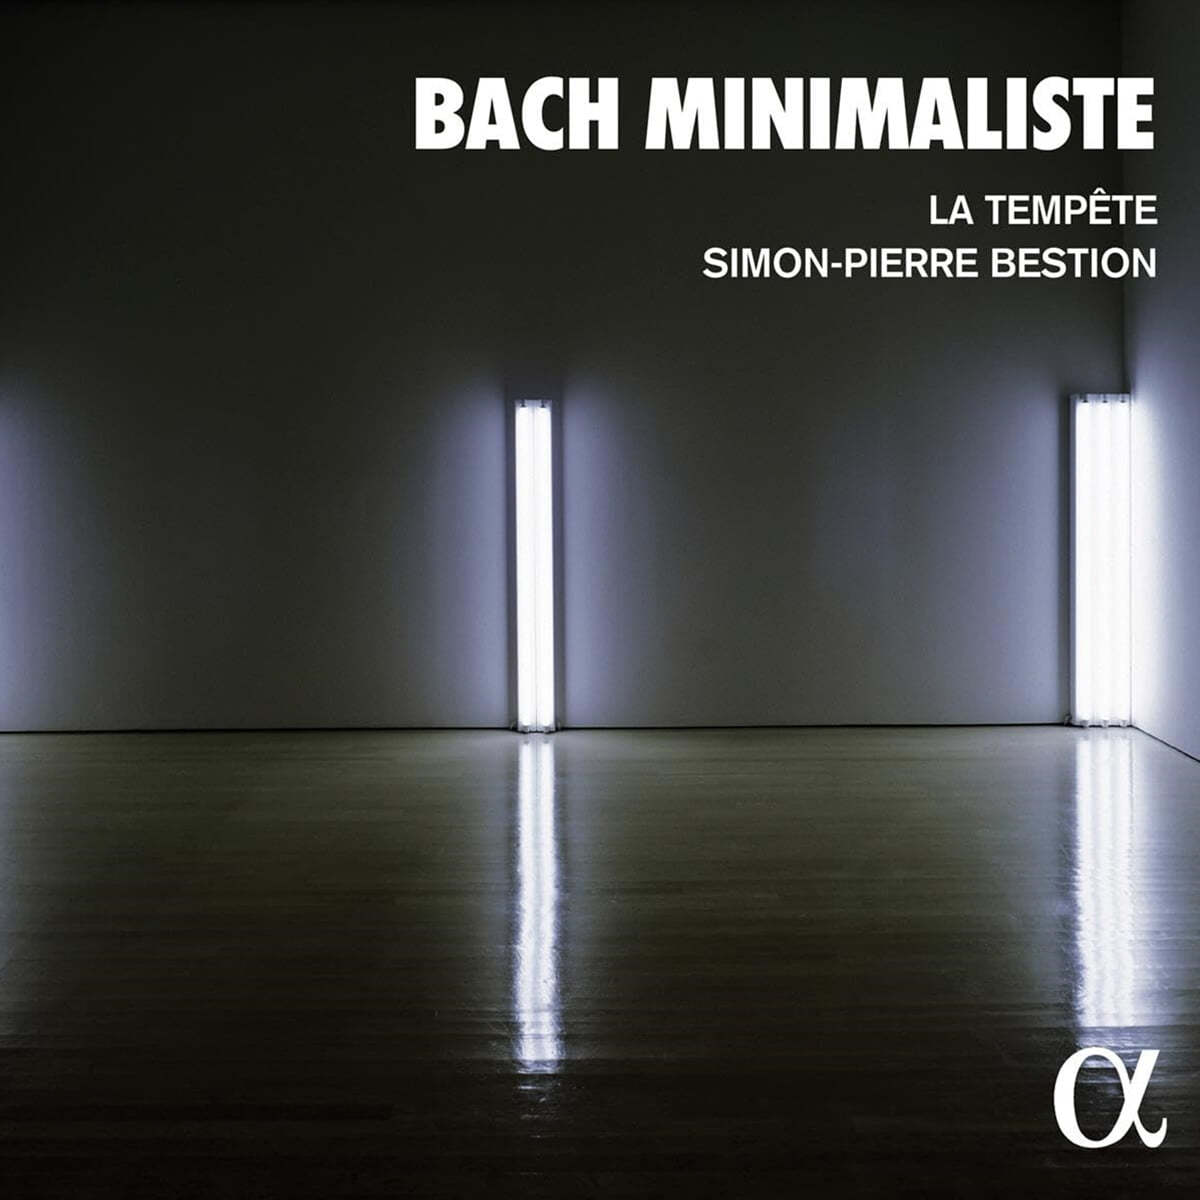 La Tempete 바흐 미니멀리스트 (Bach Minimaliste)